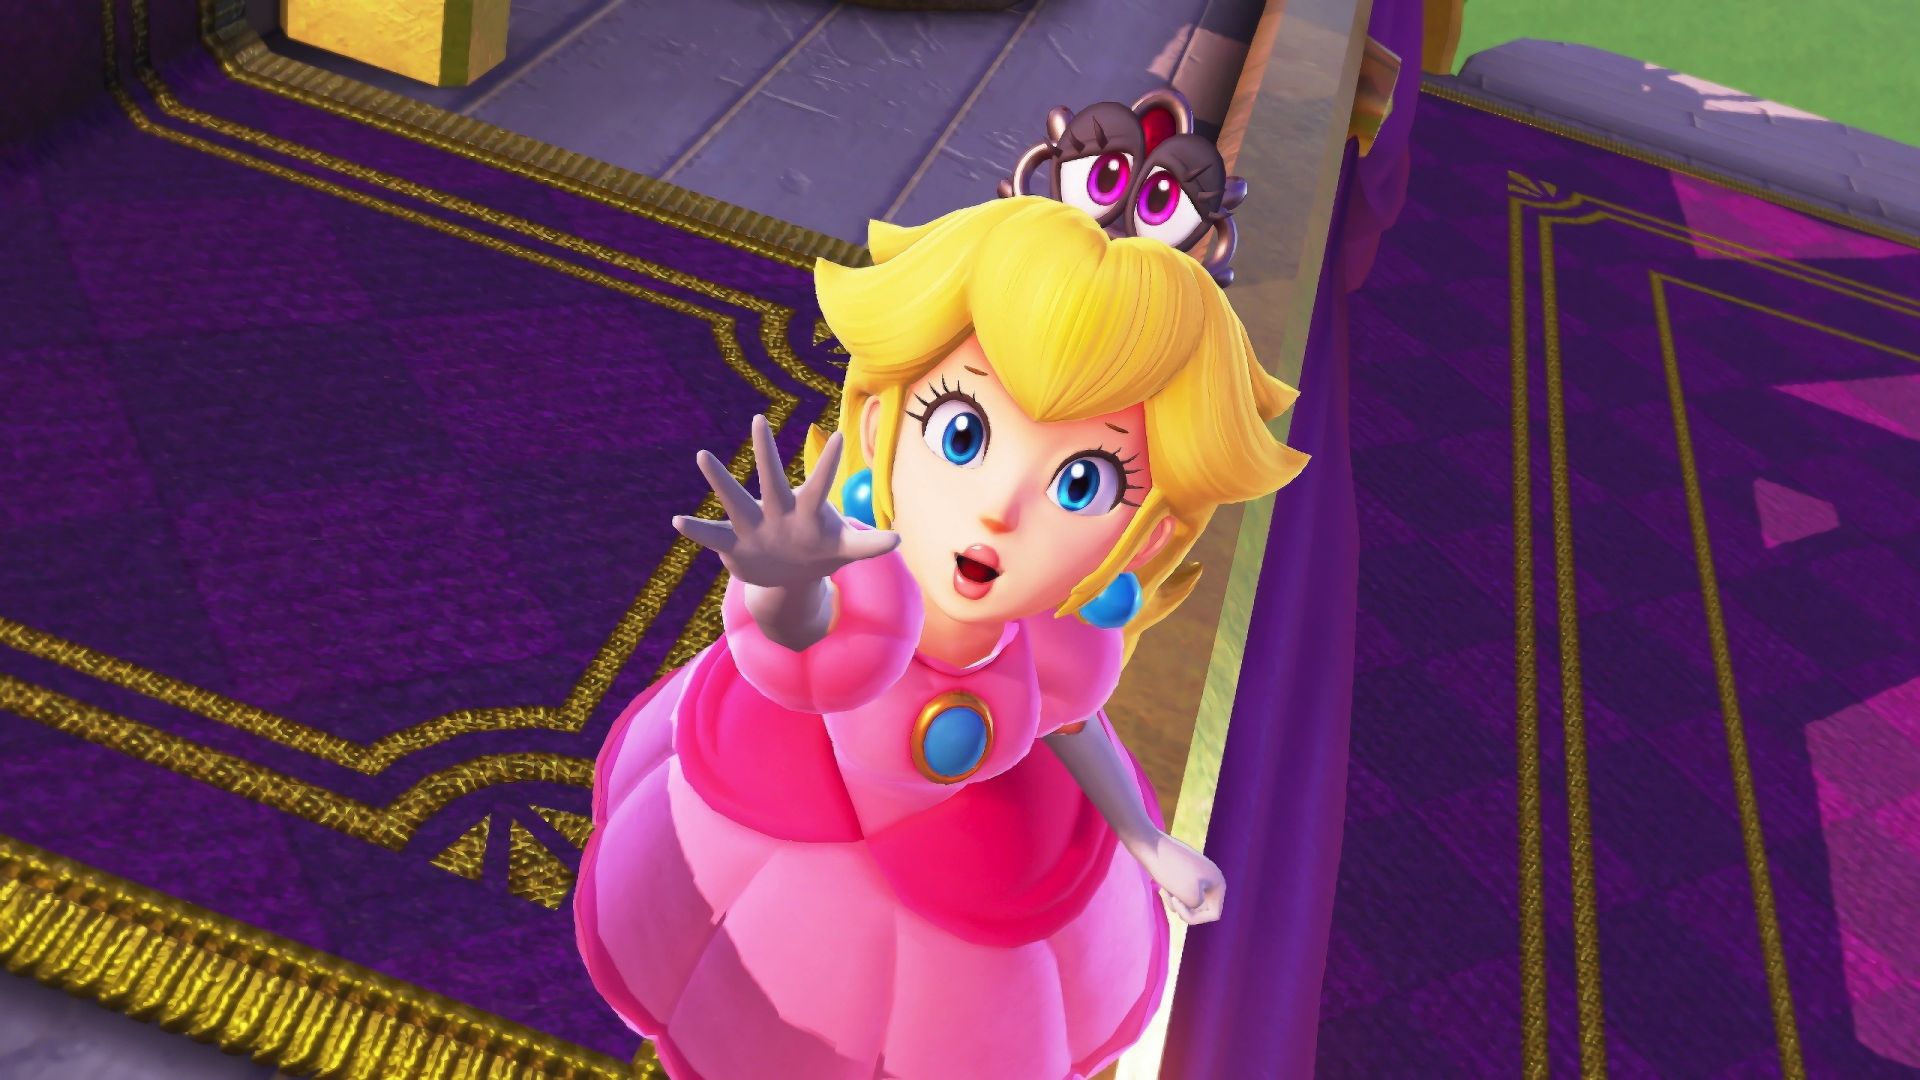 Desktop Wallpaper Blonde Princess Super Mario Odyssey 4k Hd